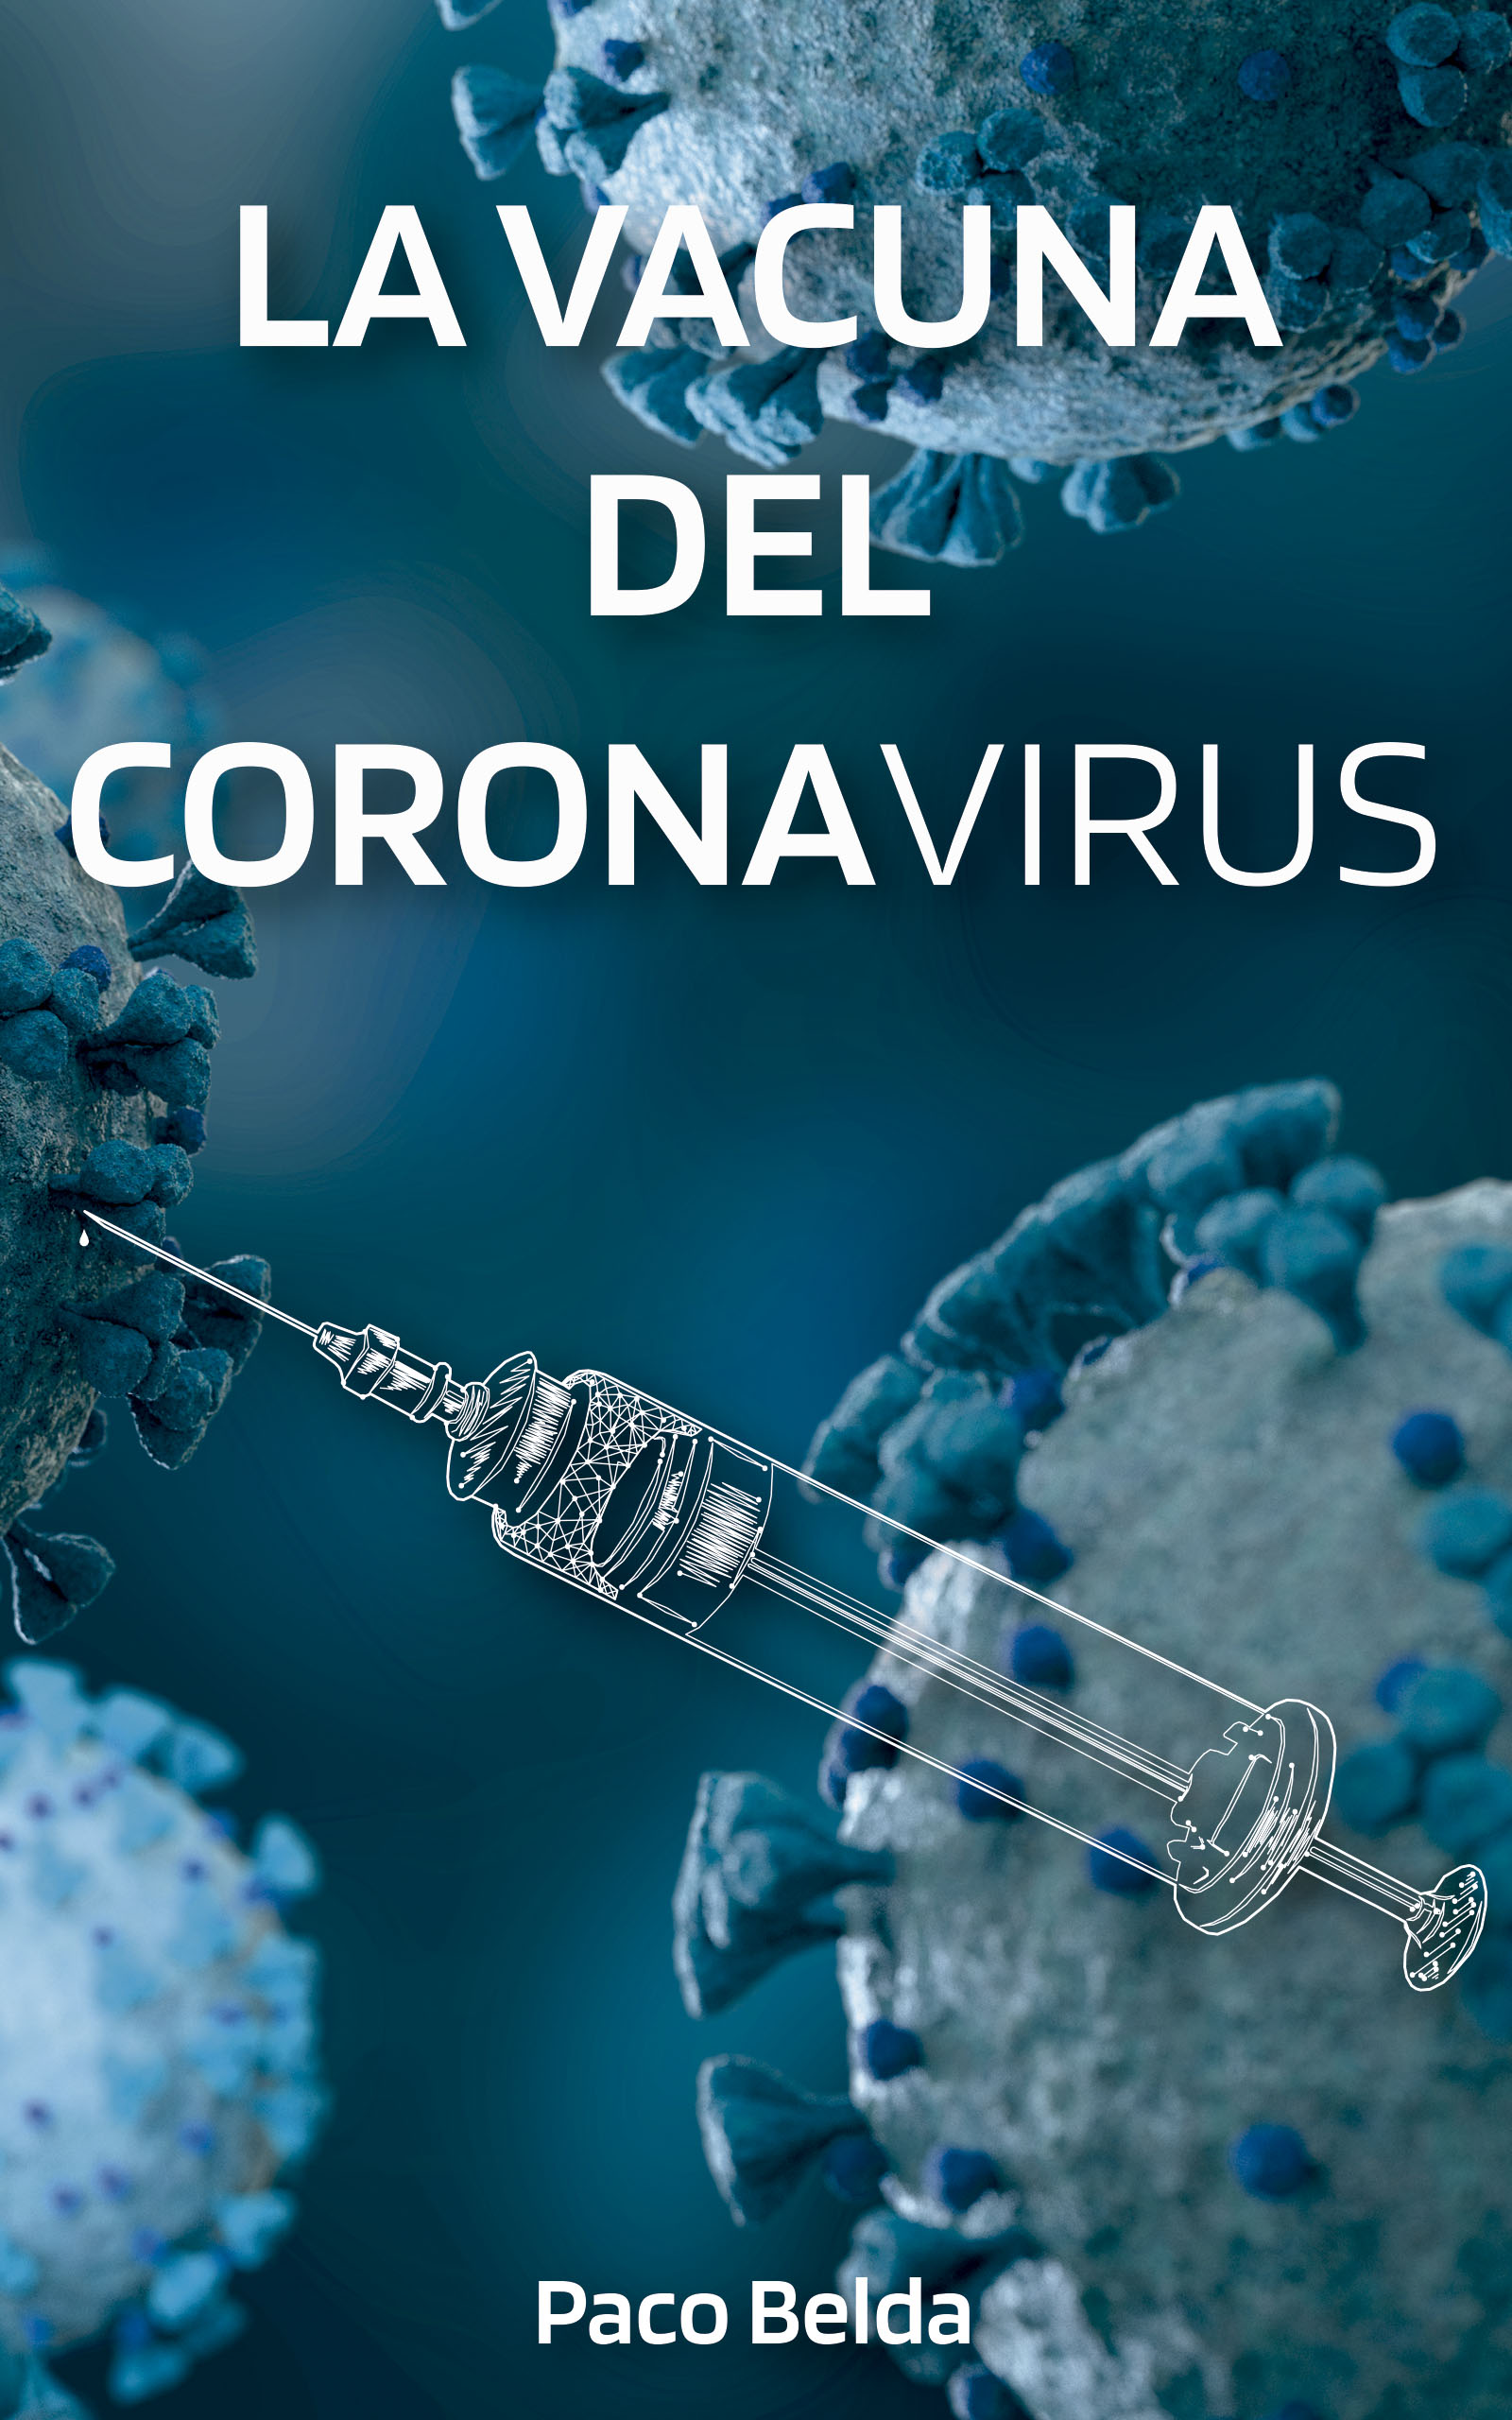 La vacuna del coronavirus, de Paco Velda